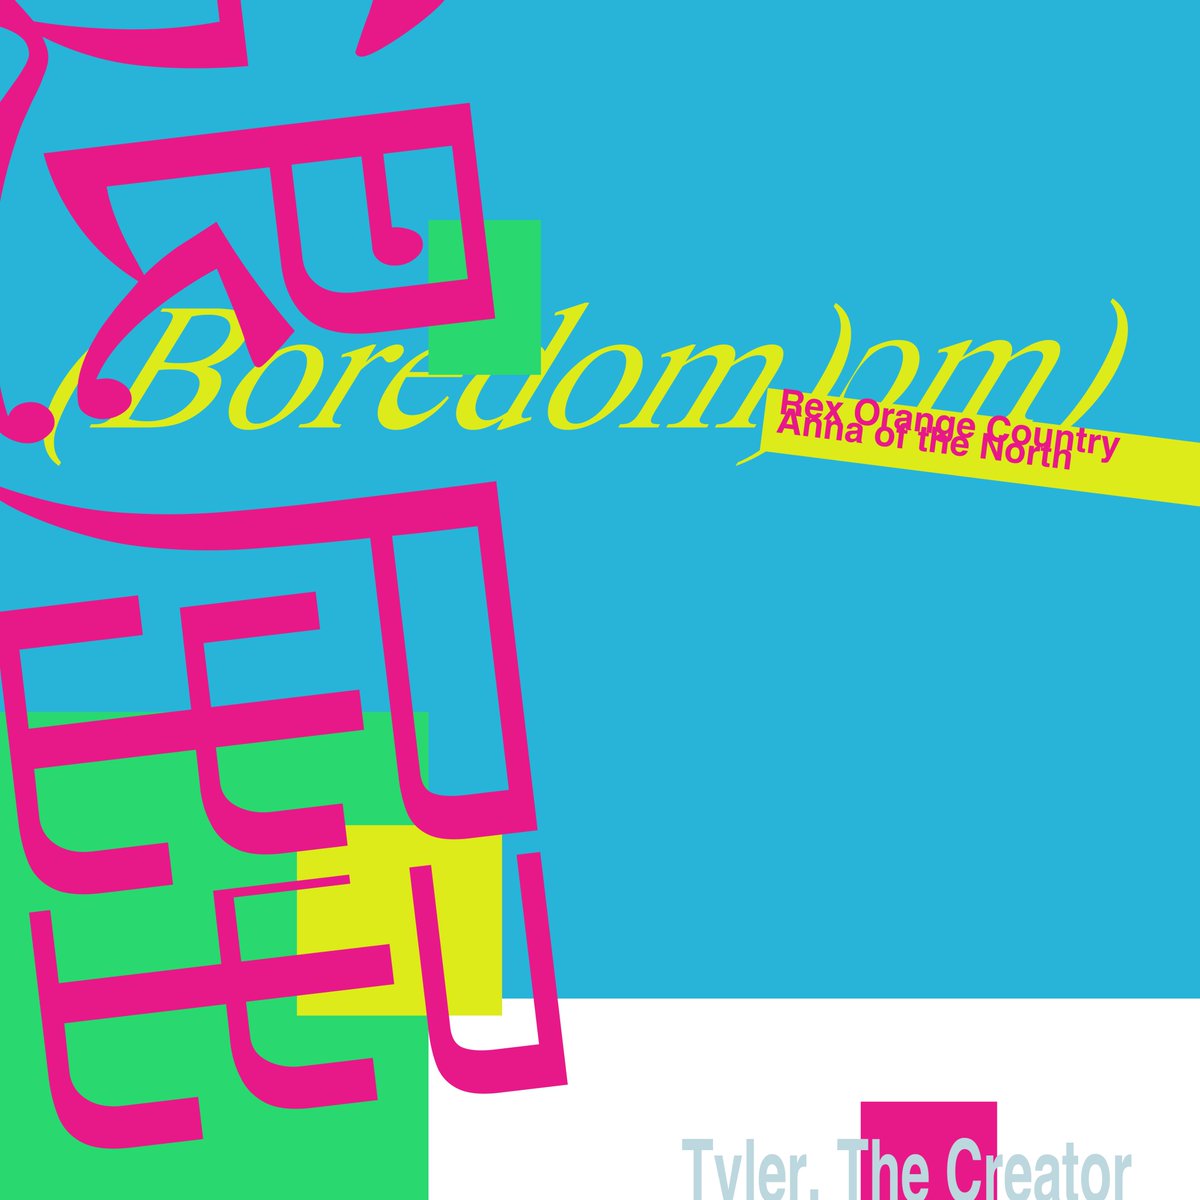 Boredom / Tyler, The Creator
#typography #typographic #typo #typeface #typedesign #typedrawn #fontdesign #logo #graphicdesign #posterart #posterartdesign #タイポグラフィ #タイポ #グラフィックデザイン #ポスターアート #作字デザイン #文字デザイン #字体設計